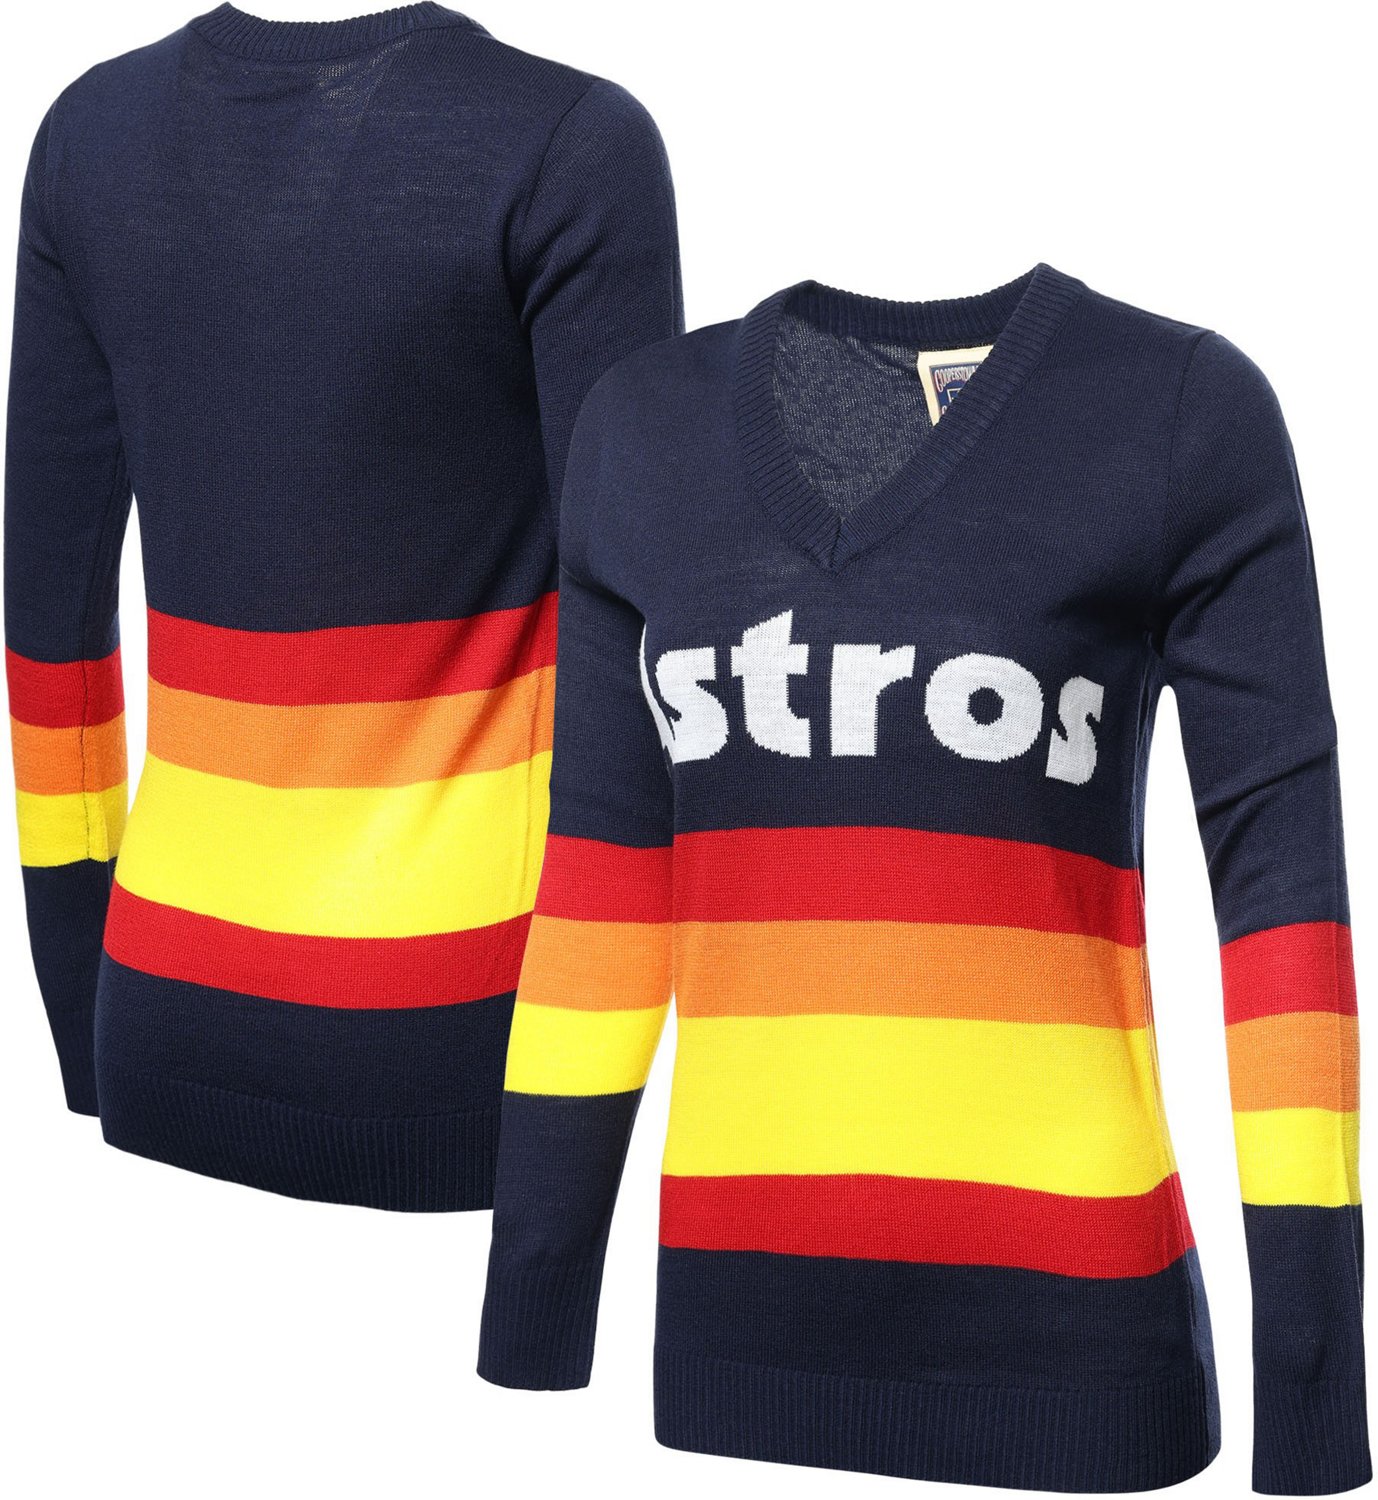 astros rainbow sweater